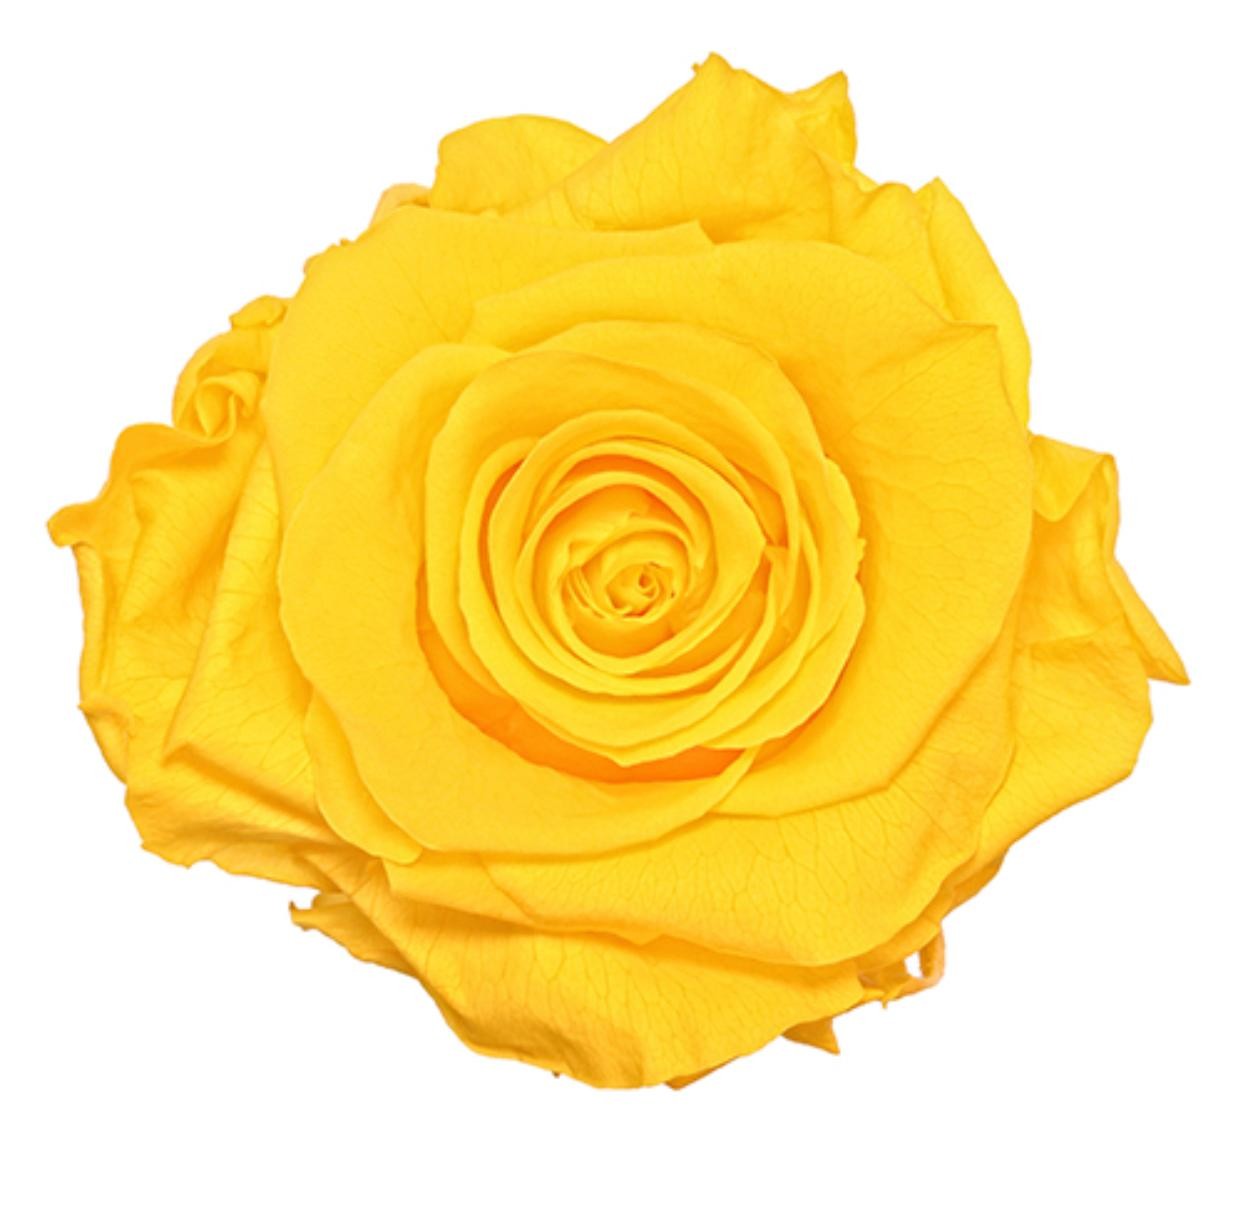 Preserved Ecuador Roses - Yellow